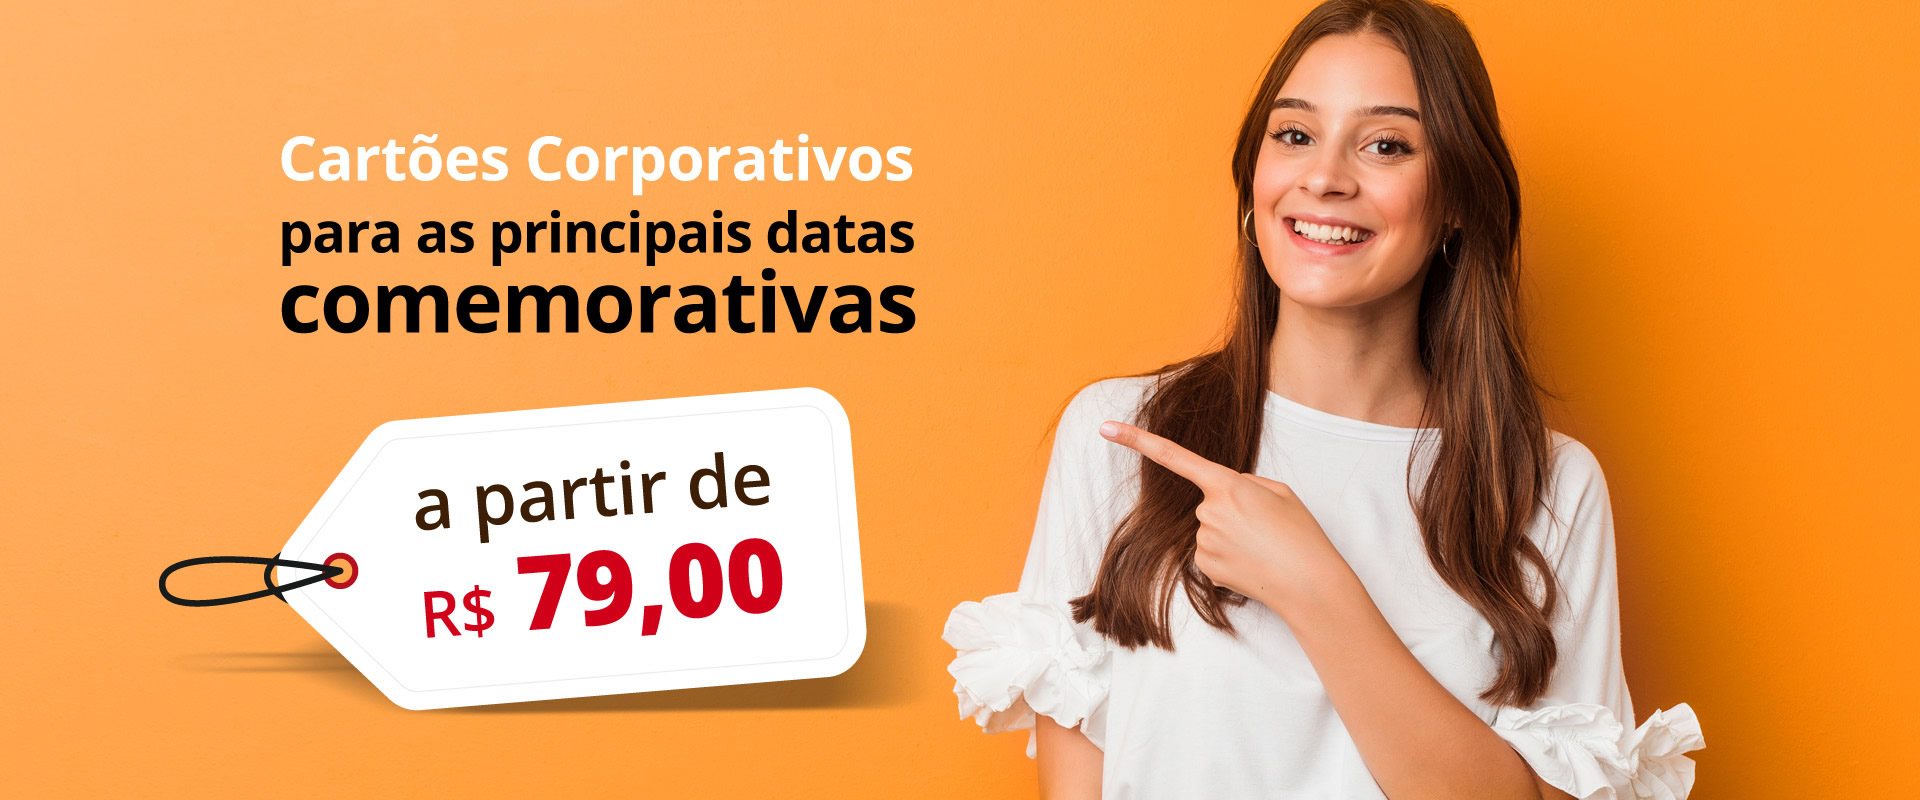 Banner Cartões Corporativos Oferta